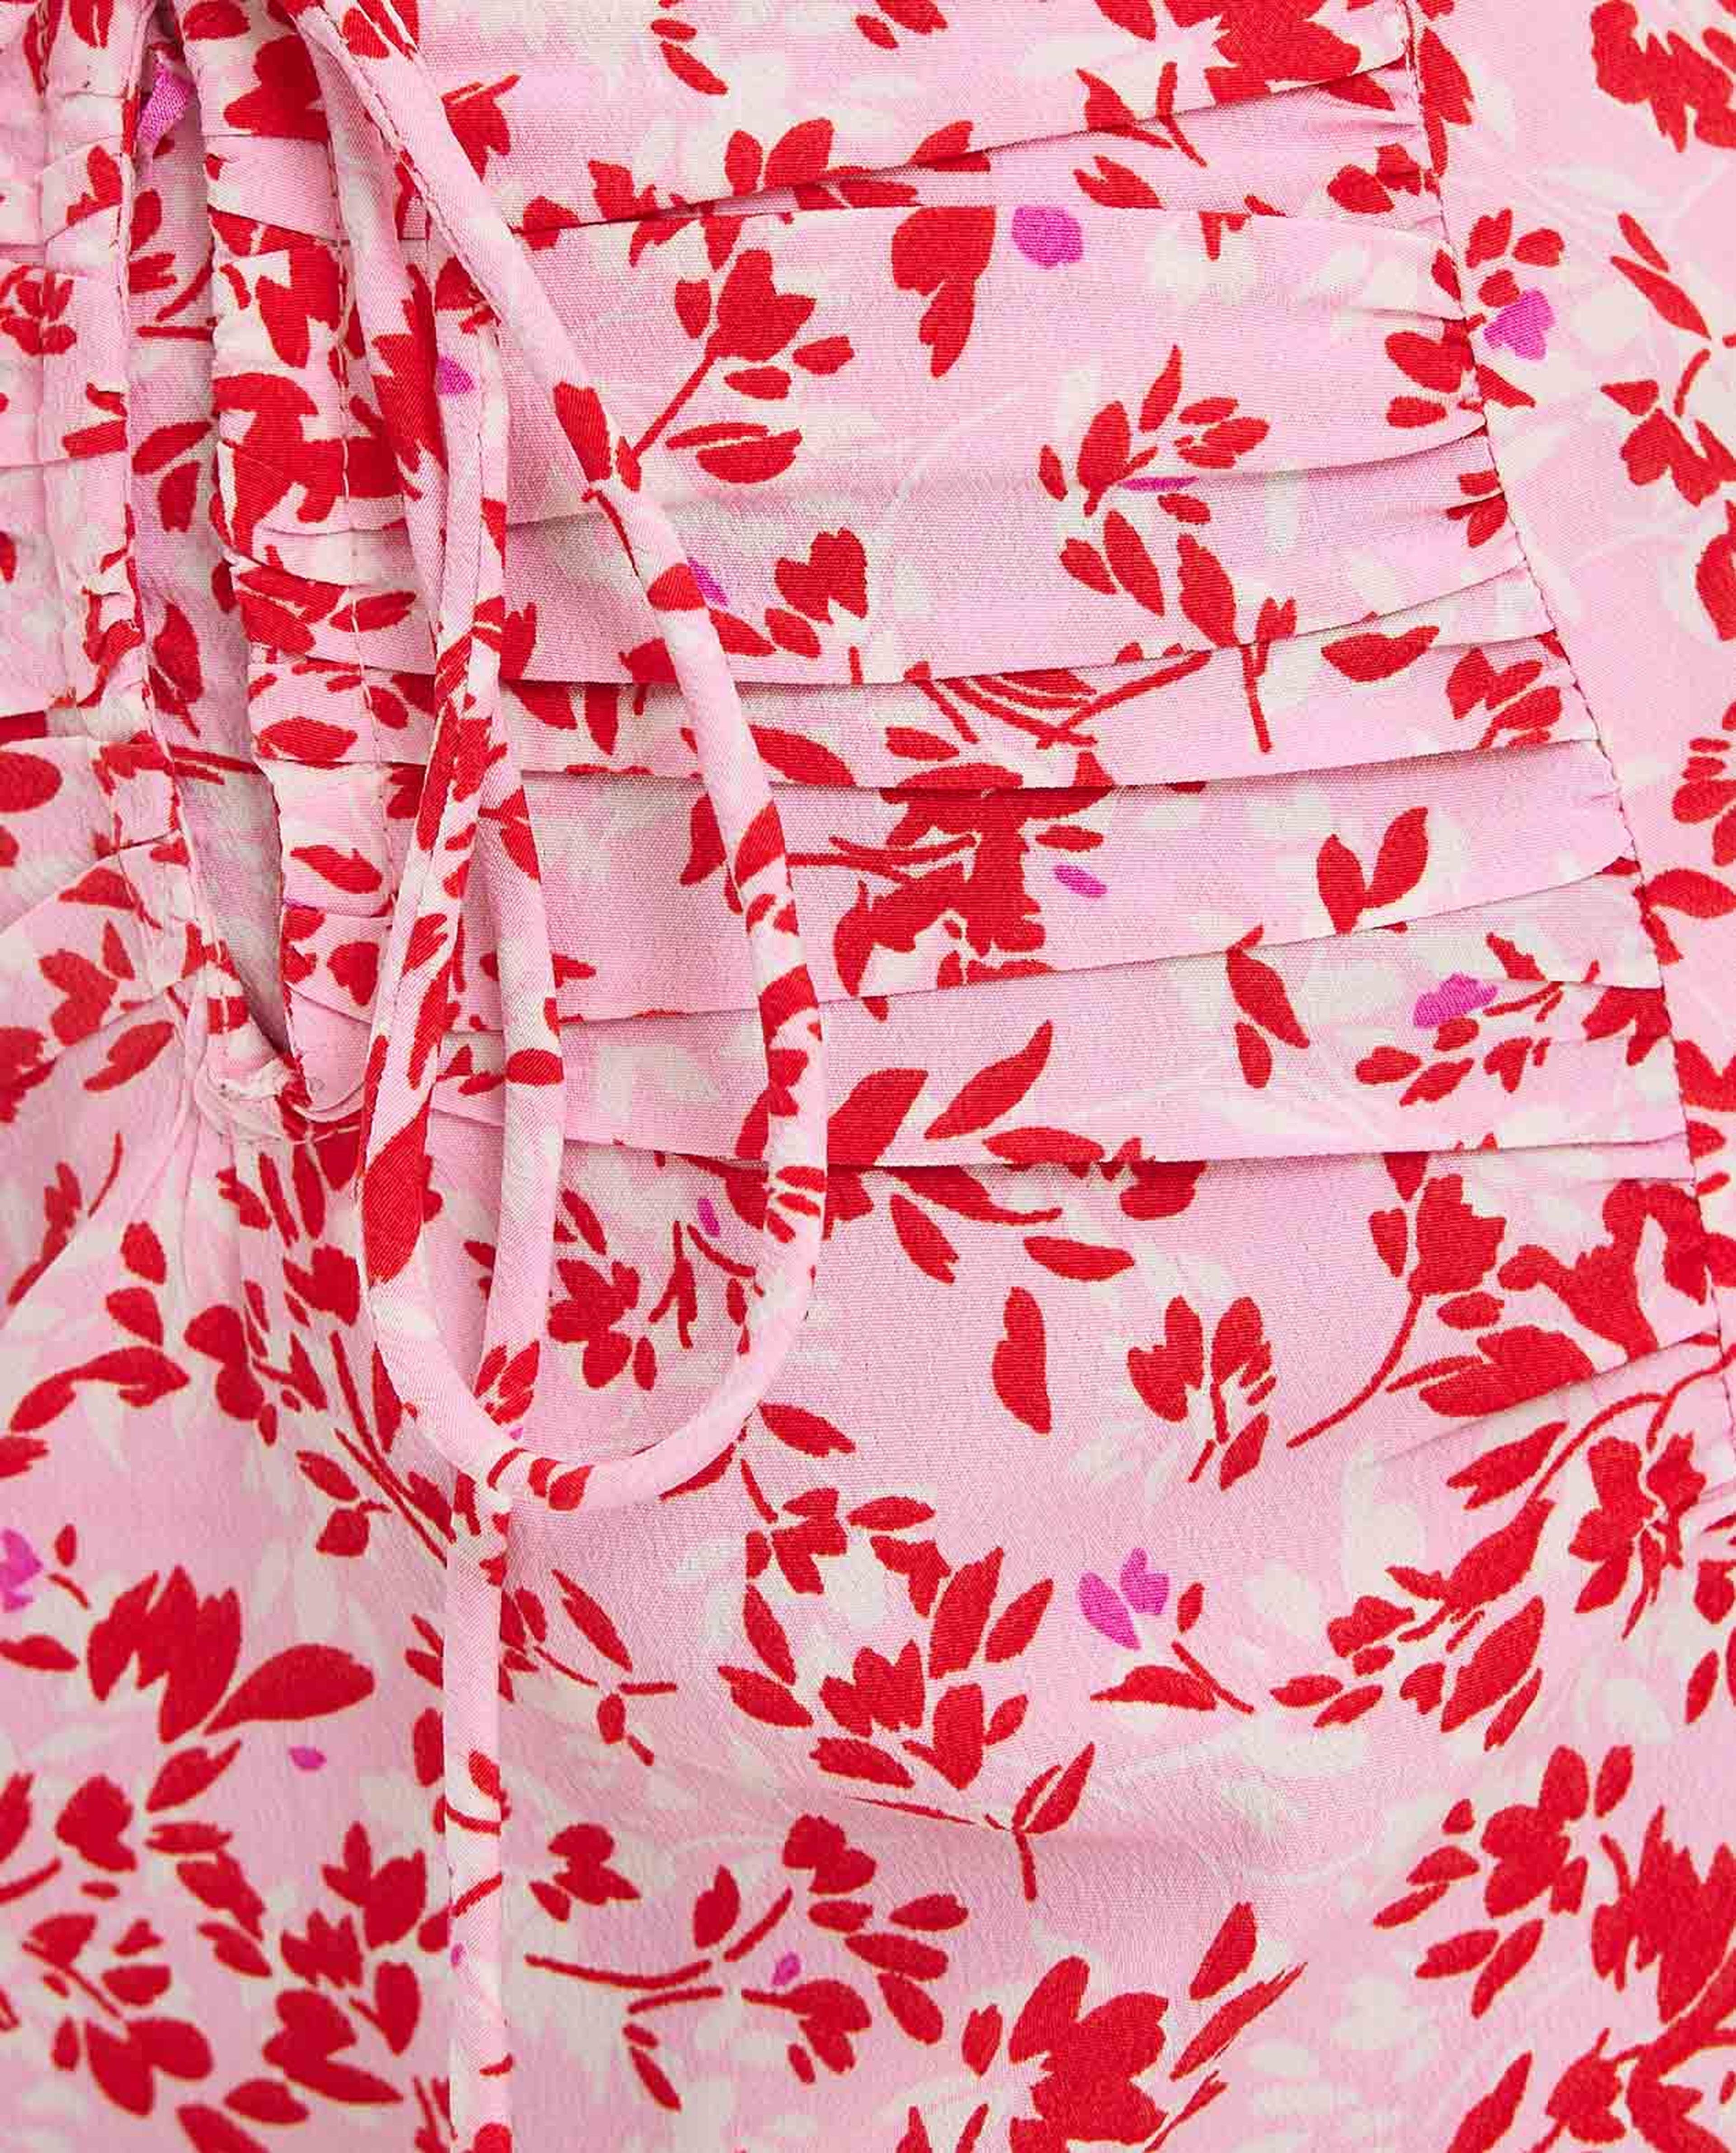 Floral Printed Straight Midi Skirt